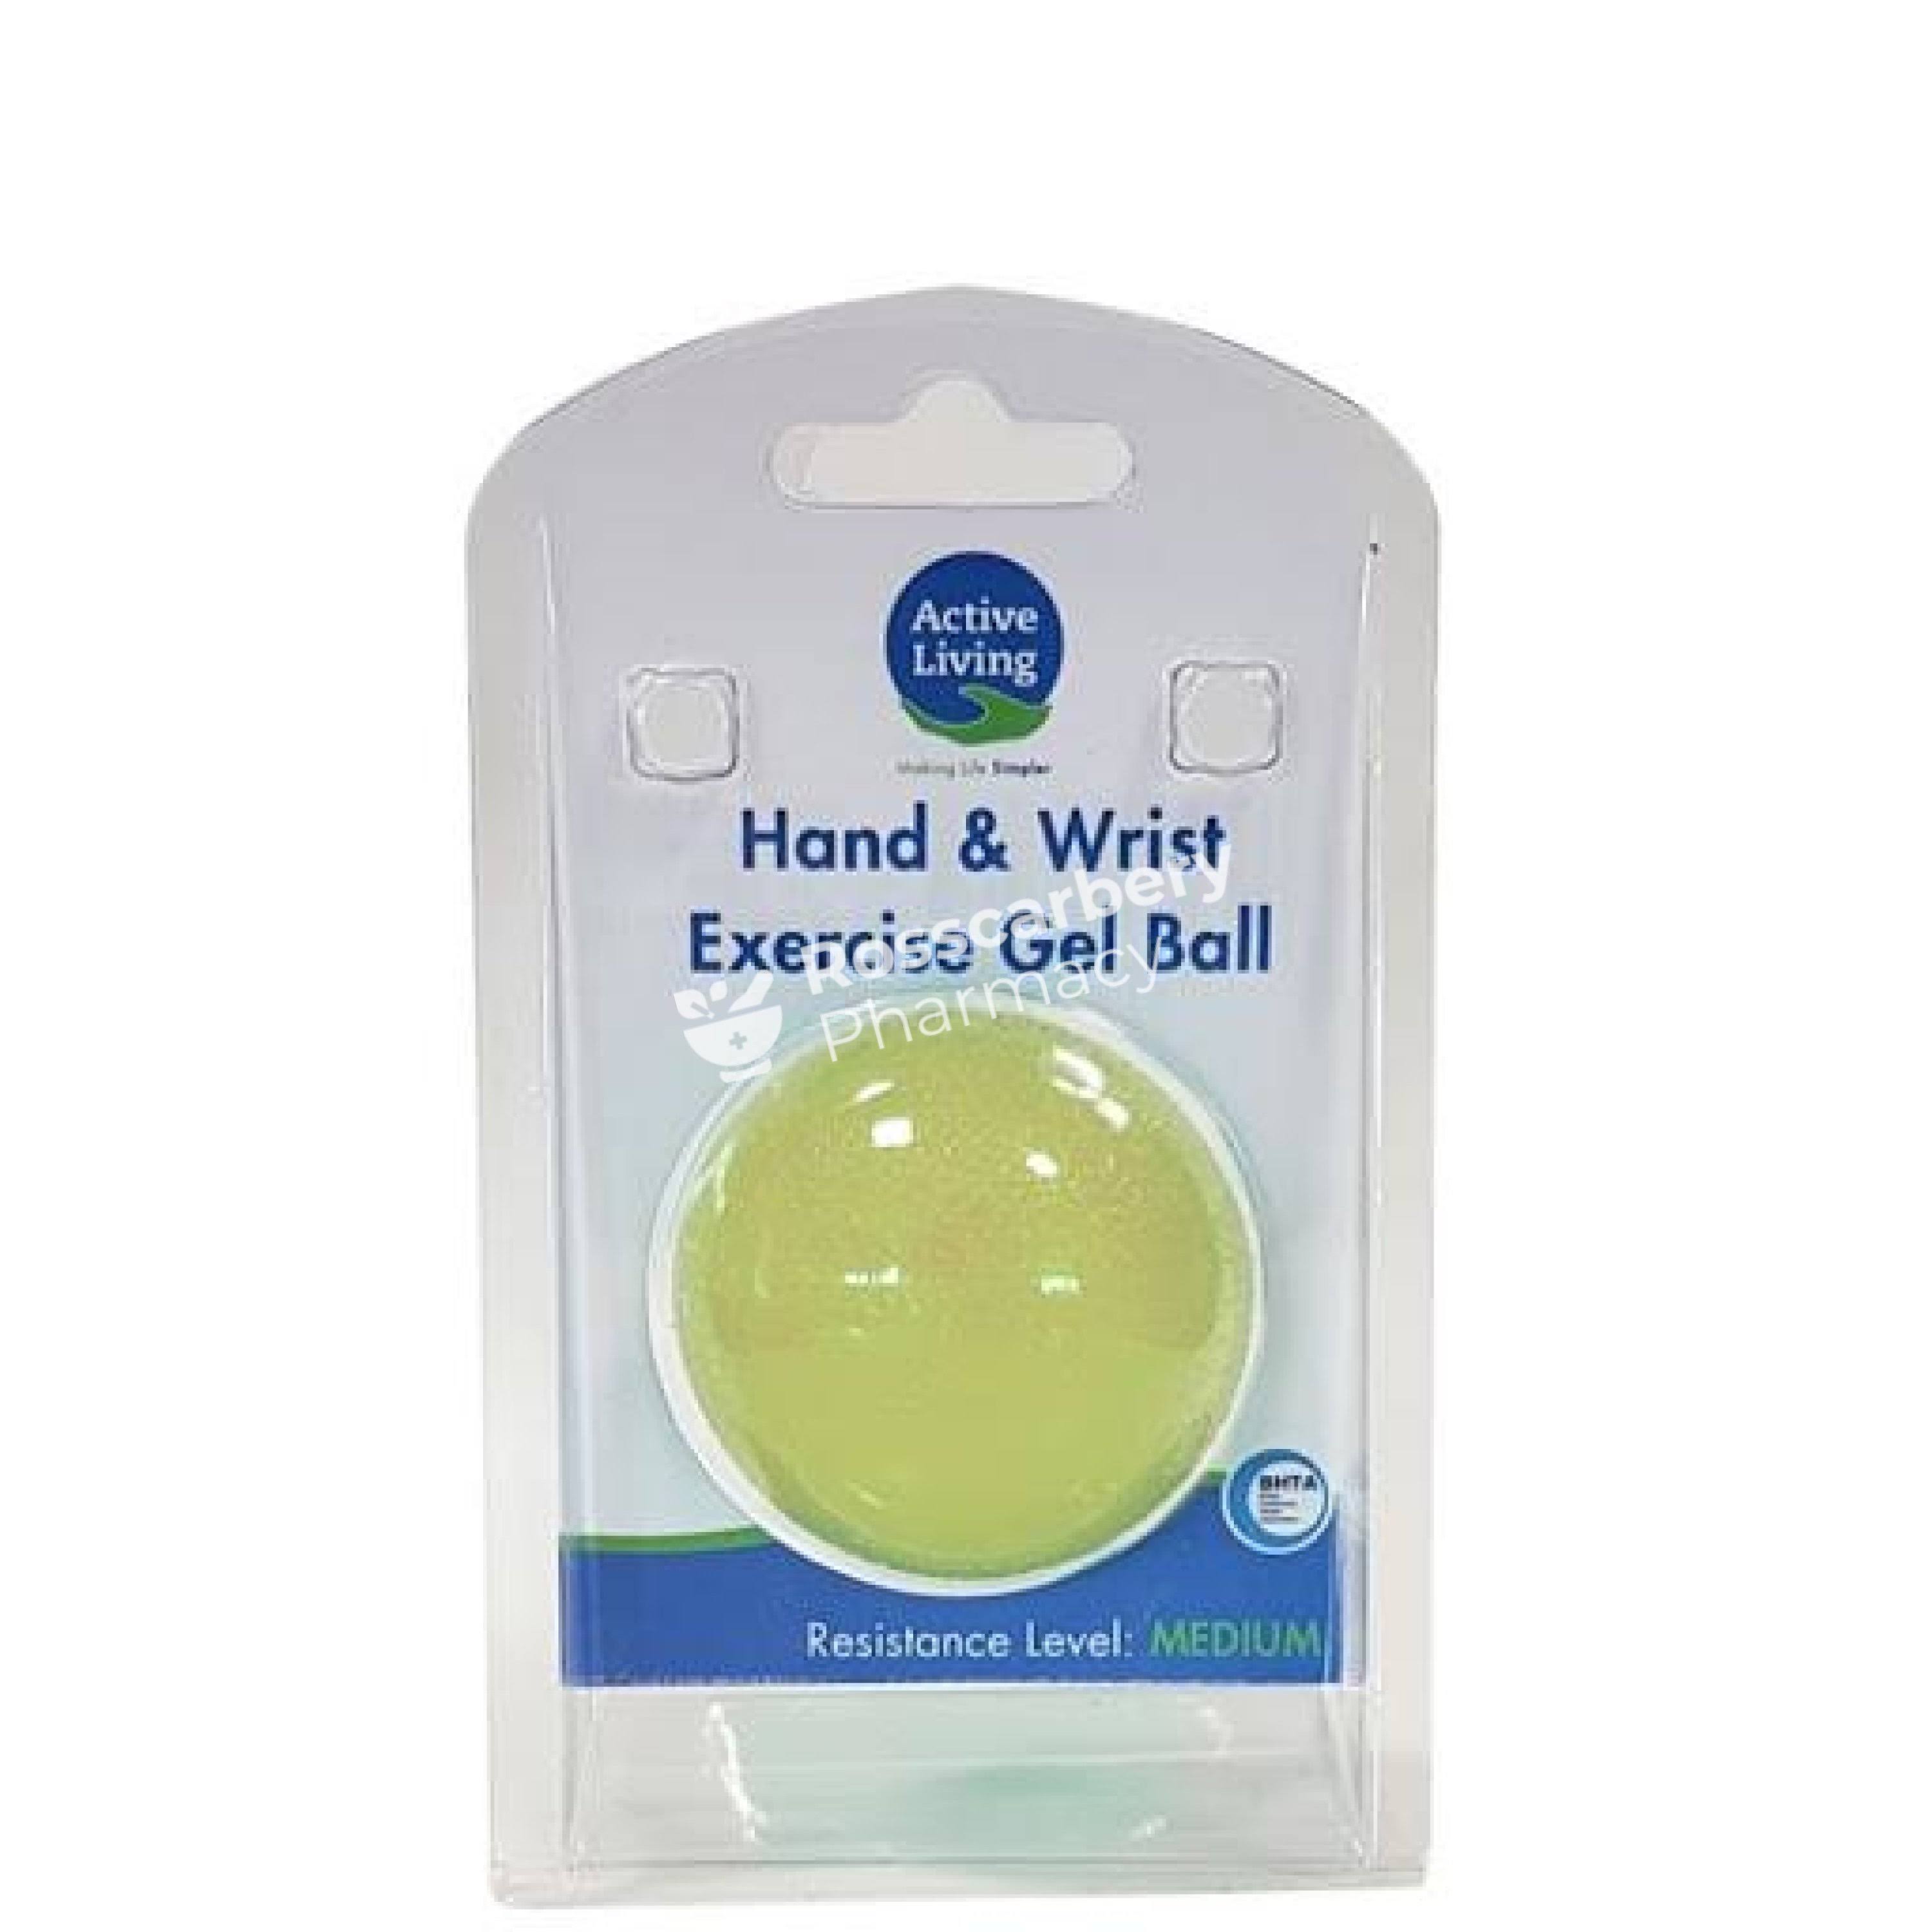 Active Living Hand & Wrist Exercise Gel Ball Green Medium Resistance